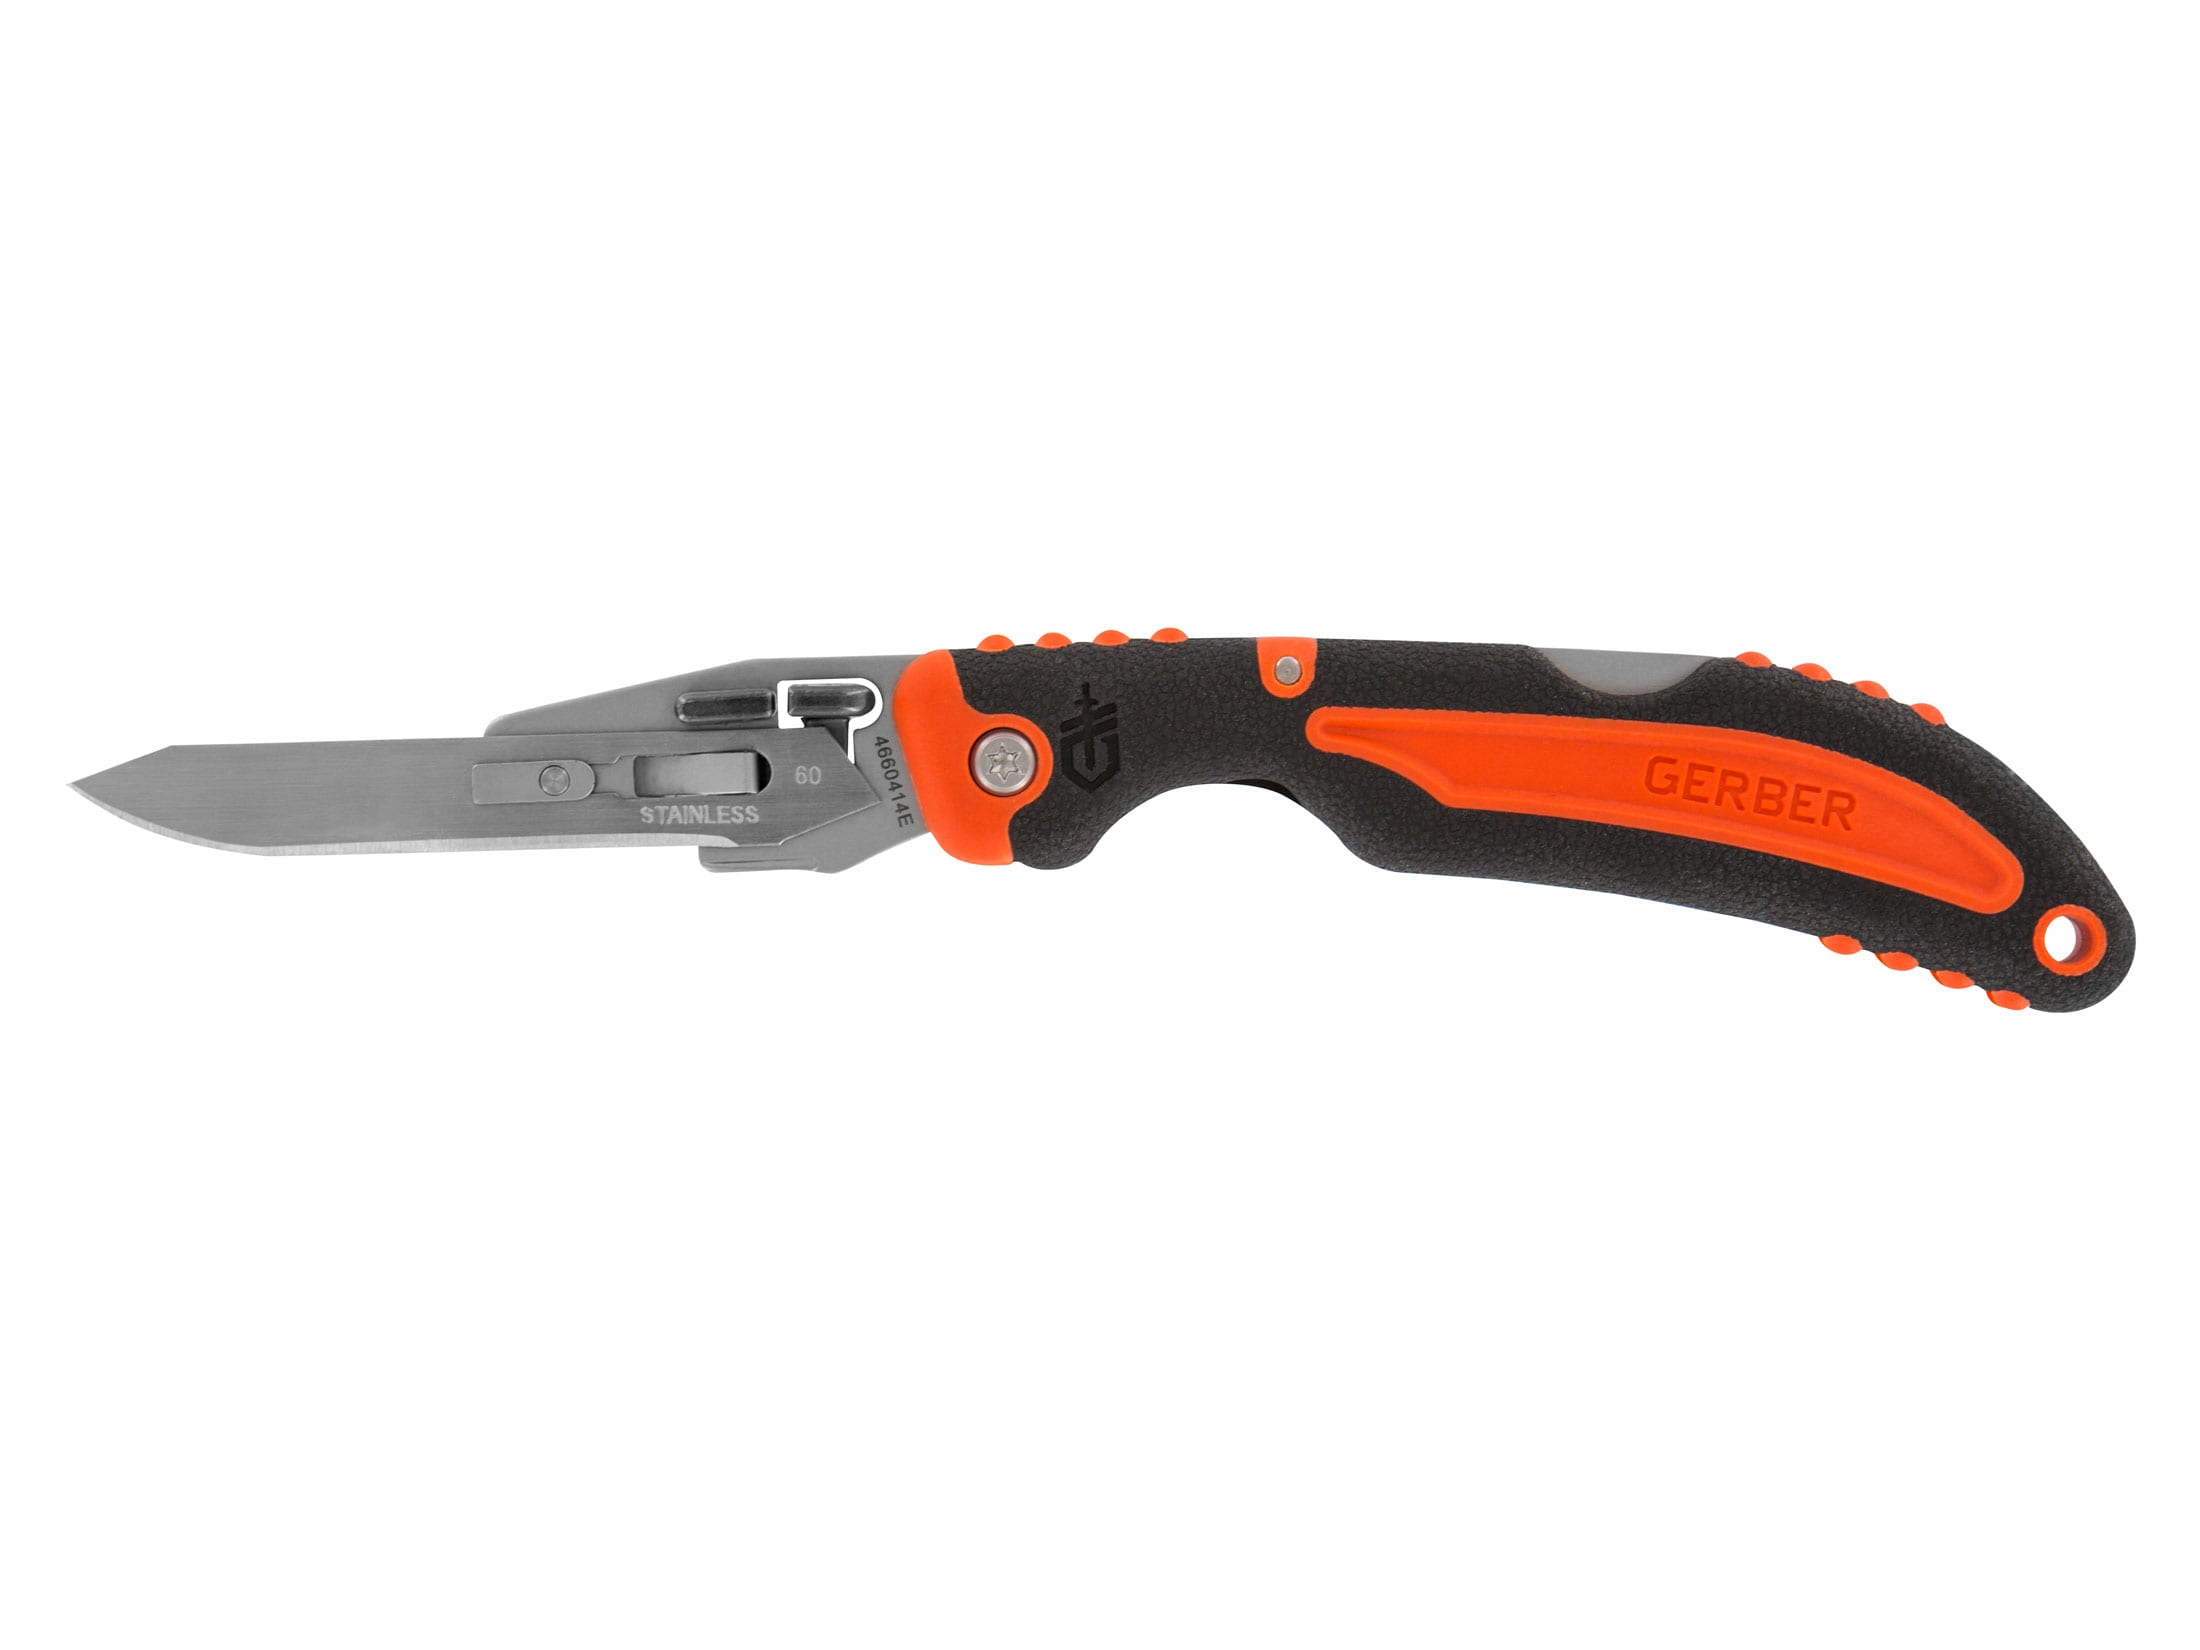 Gerber Vital Folding Skinning Knife Overmolded Rubber Handle Orange and Black For Sale